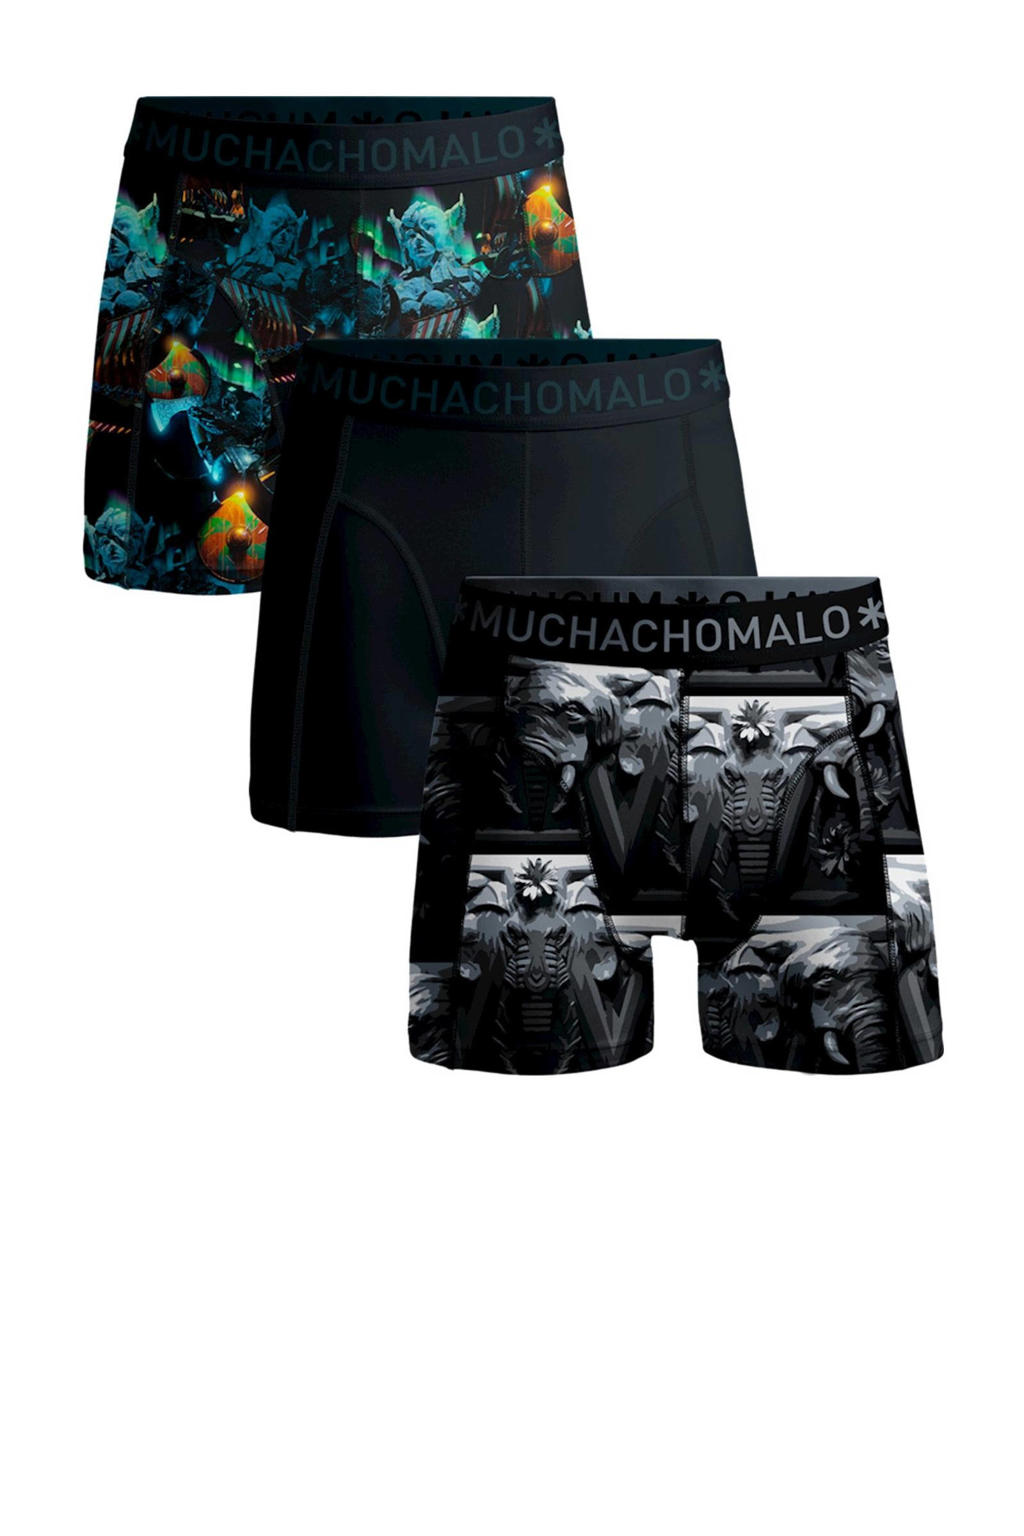 Muchachomalo   boxershort - set van 3 zwart/wit/groenblauw